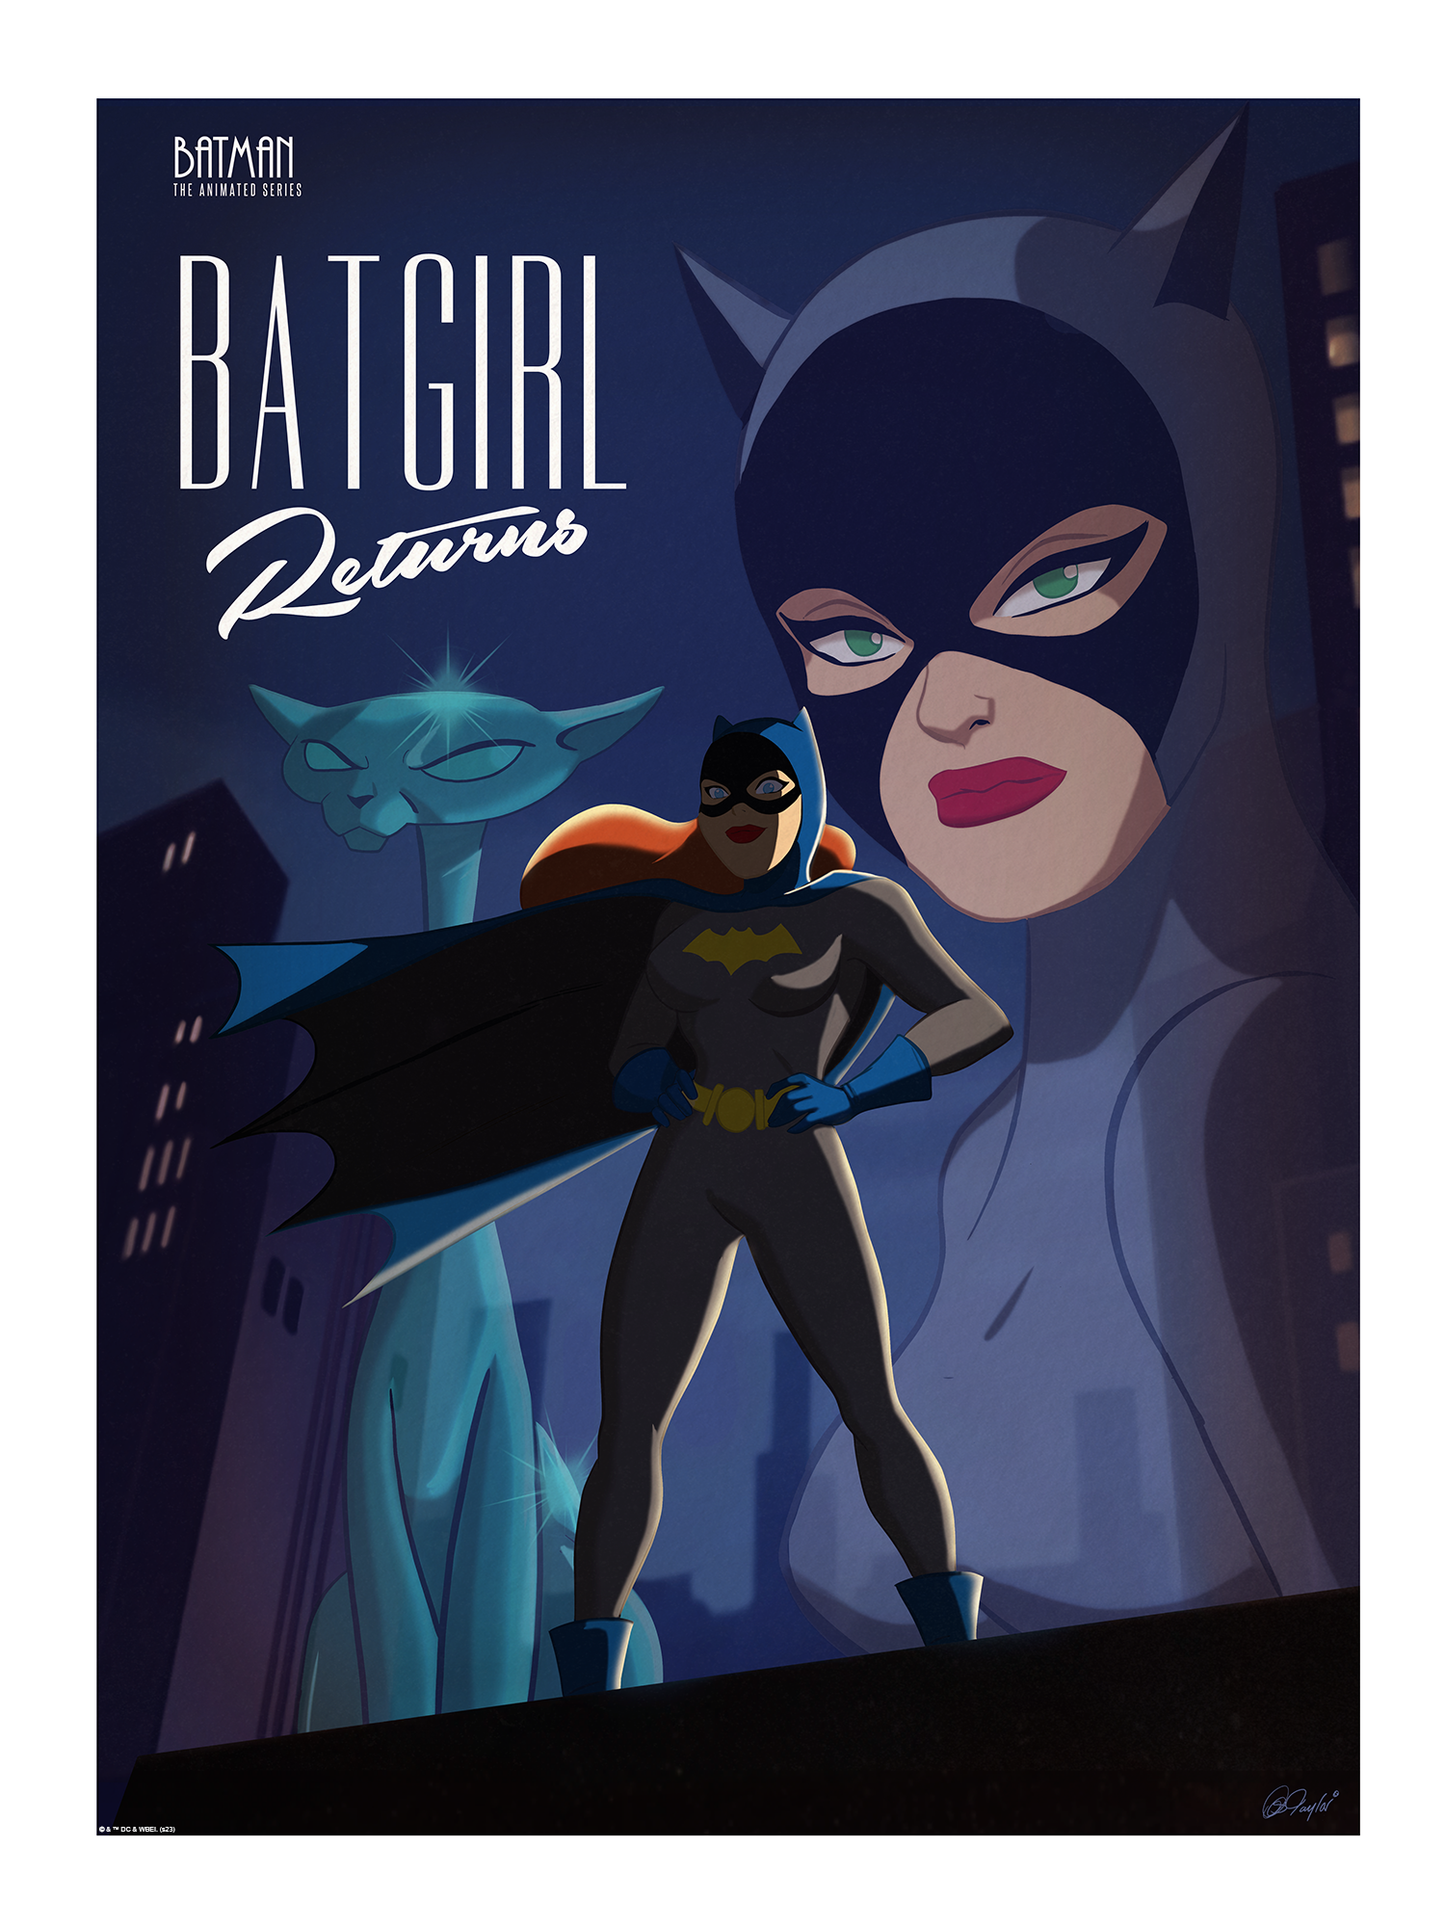 Des Taylor "Batgirl Returns"